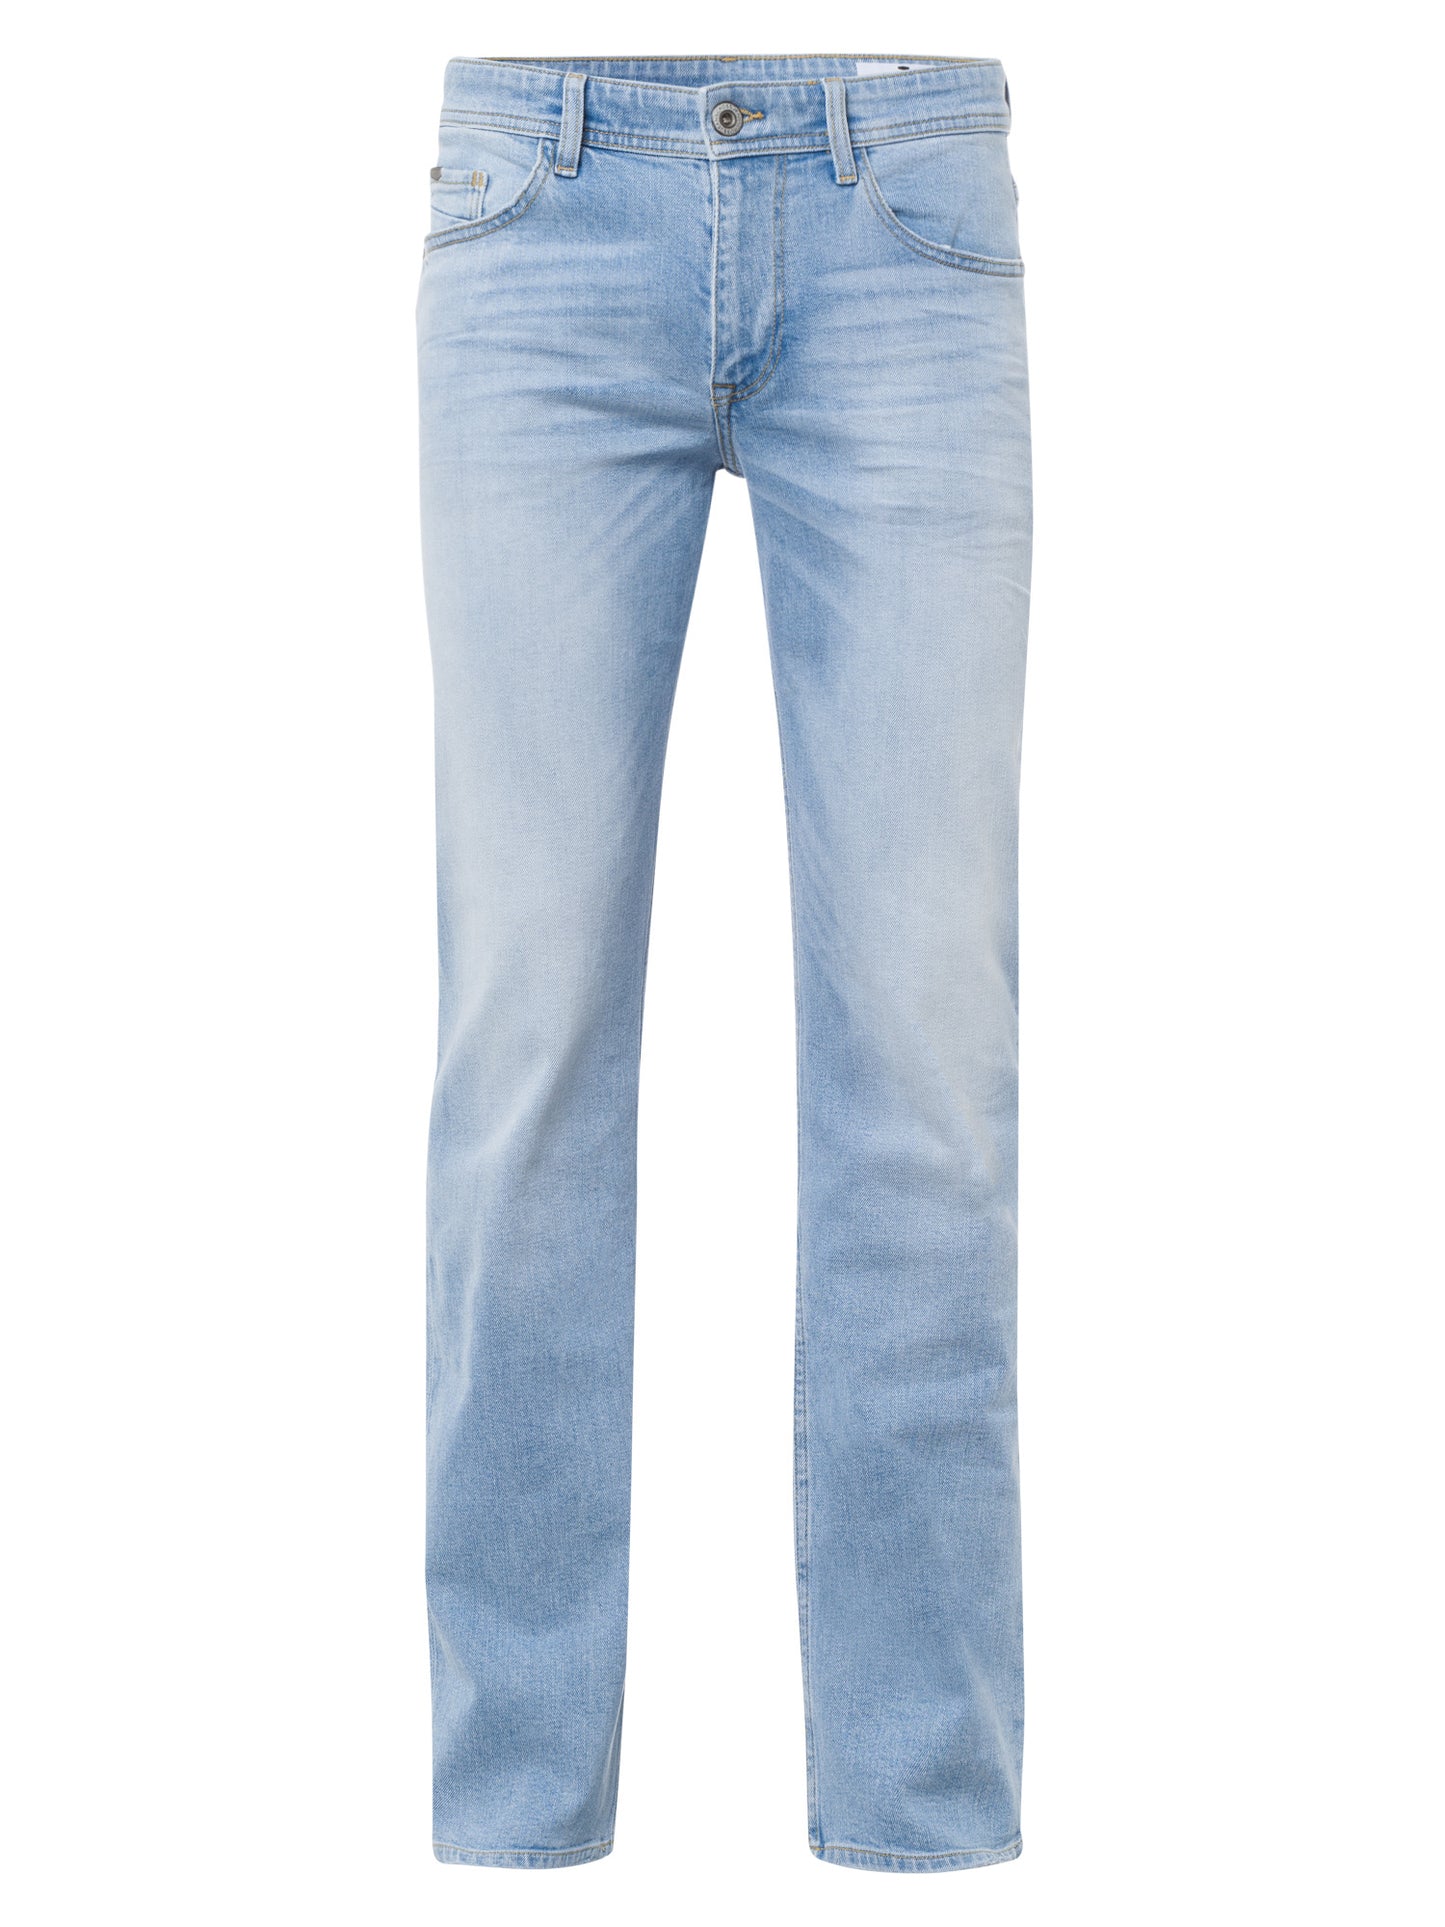 Antonio Herren Jeans Relaxed Fit Regular Waist Straight Leg hellblau